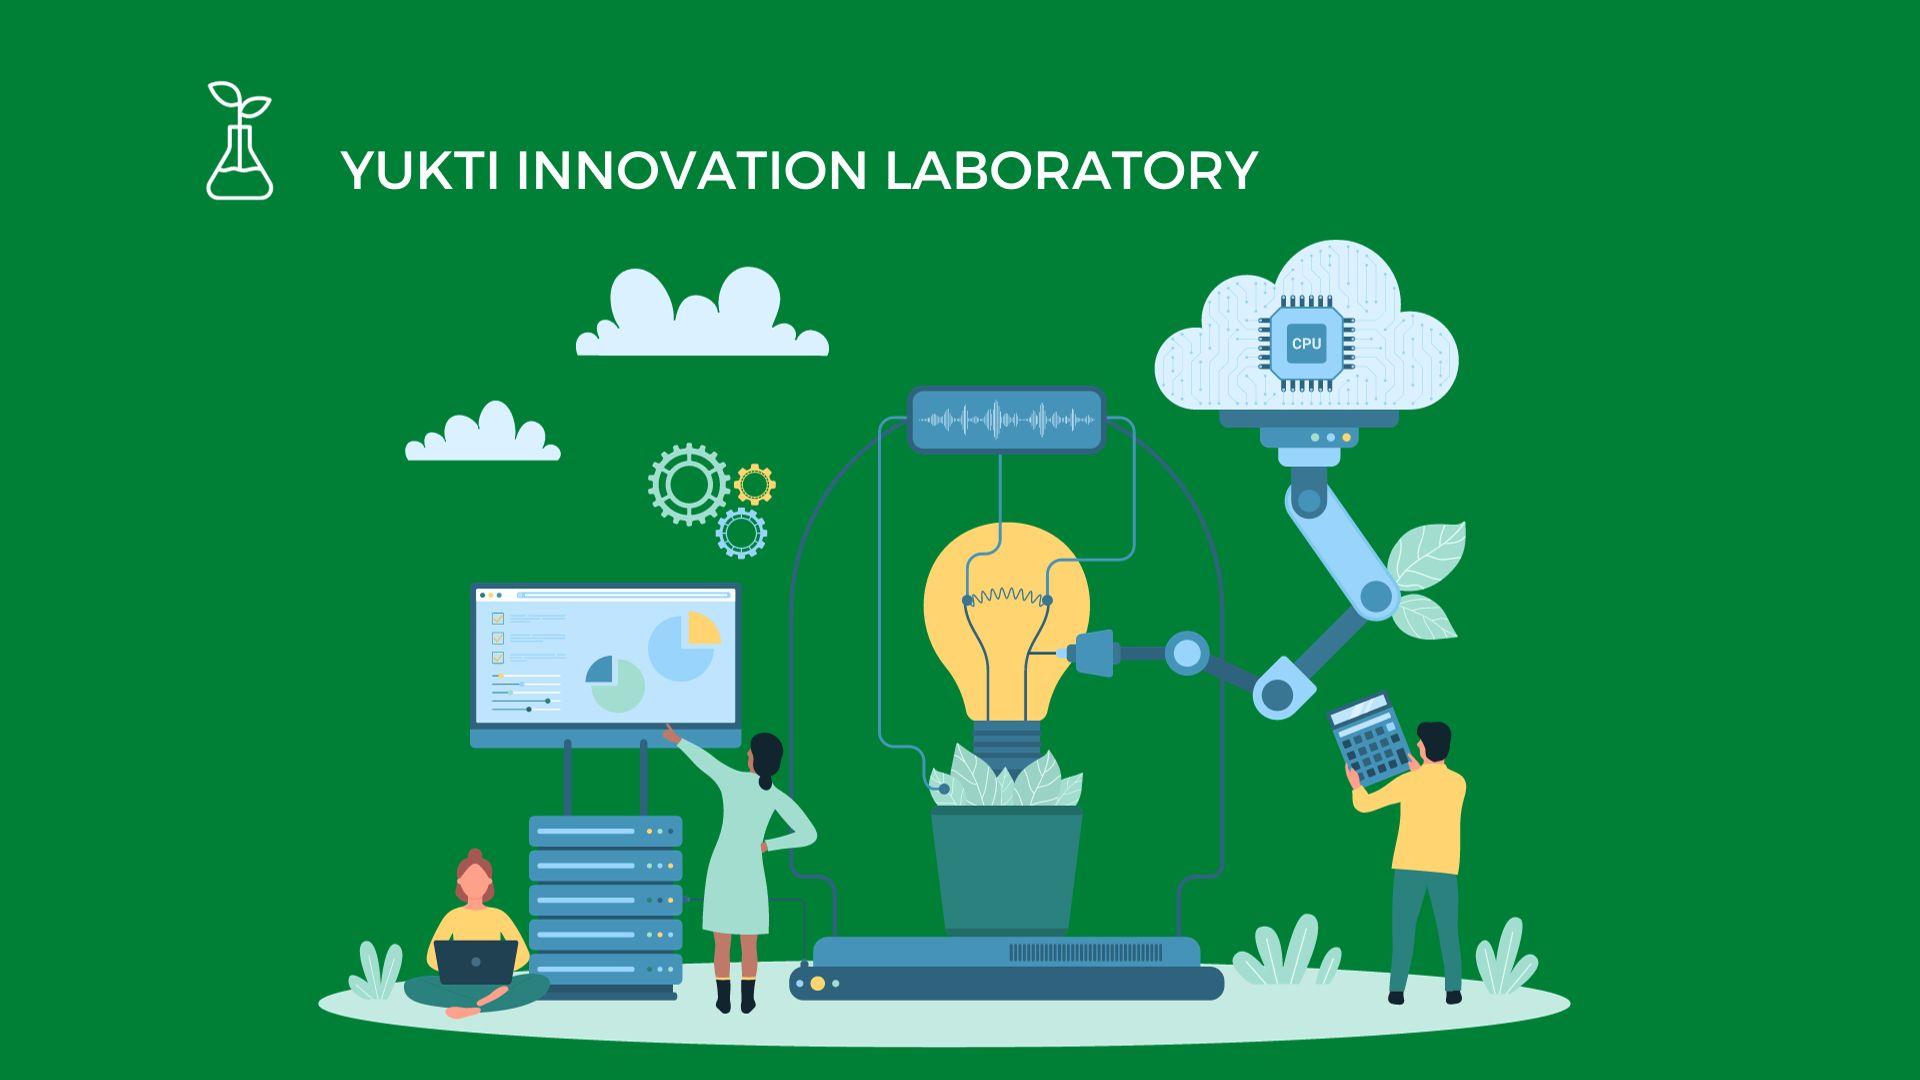 Yukti Innovation Laboratory Deccan college of engineering and technology